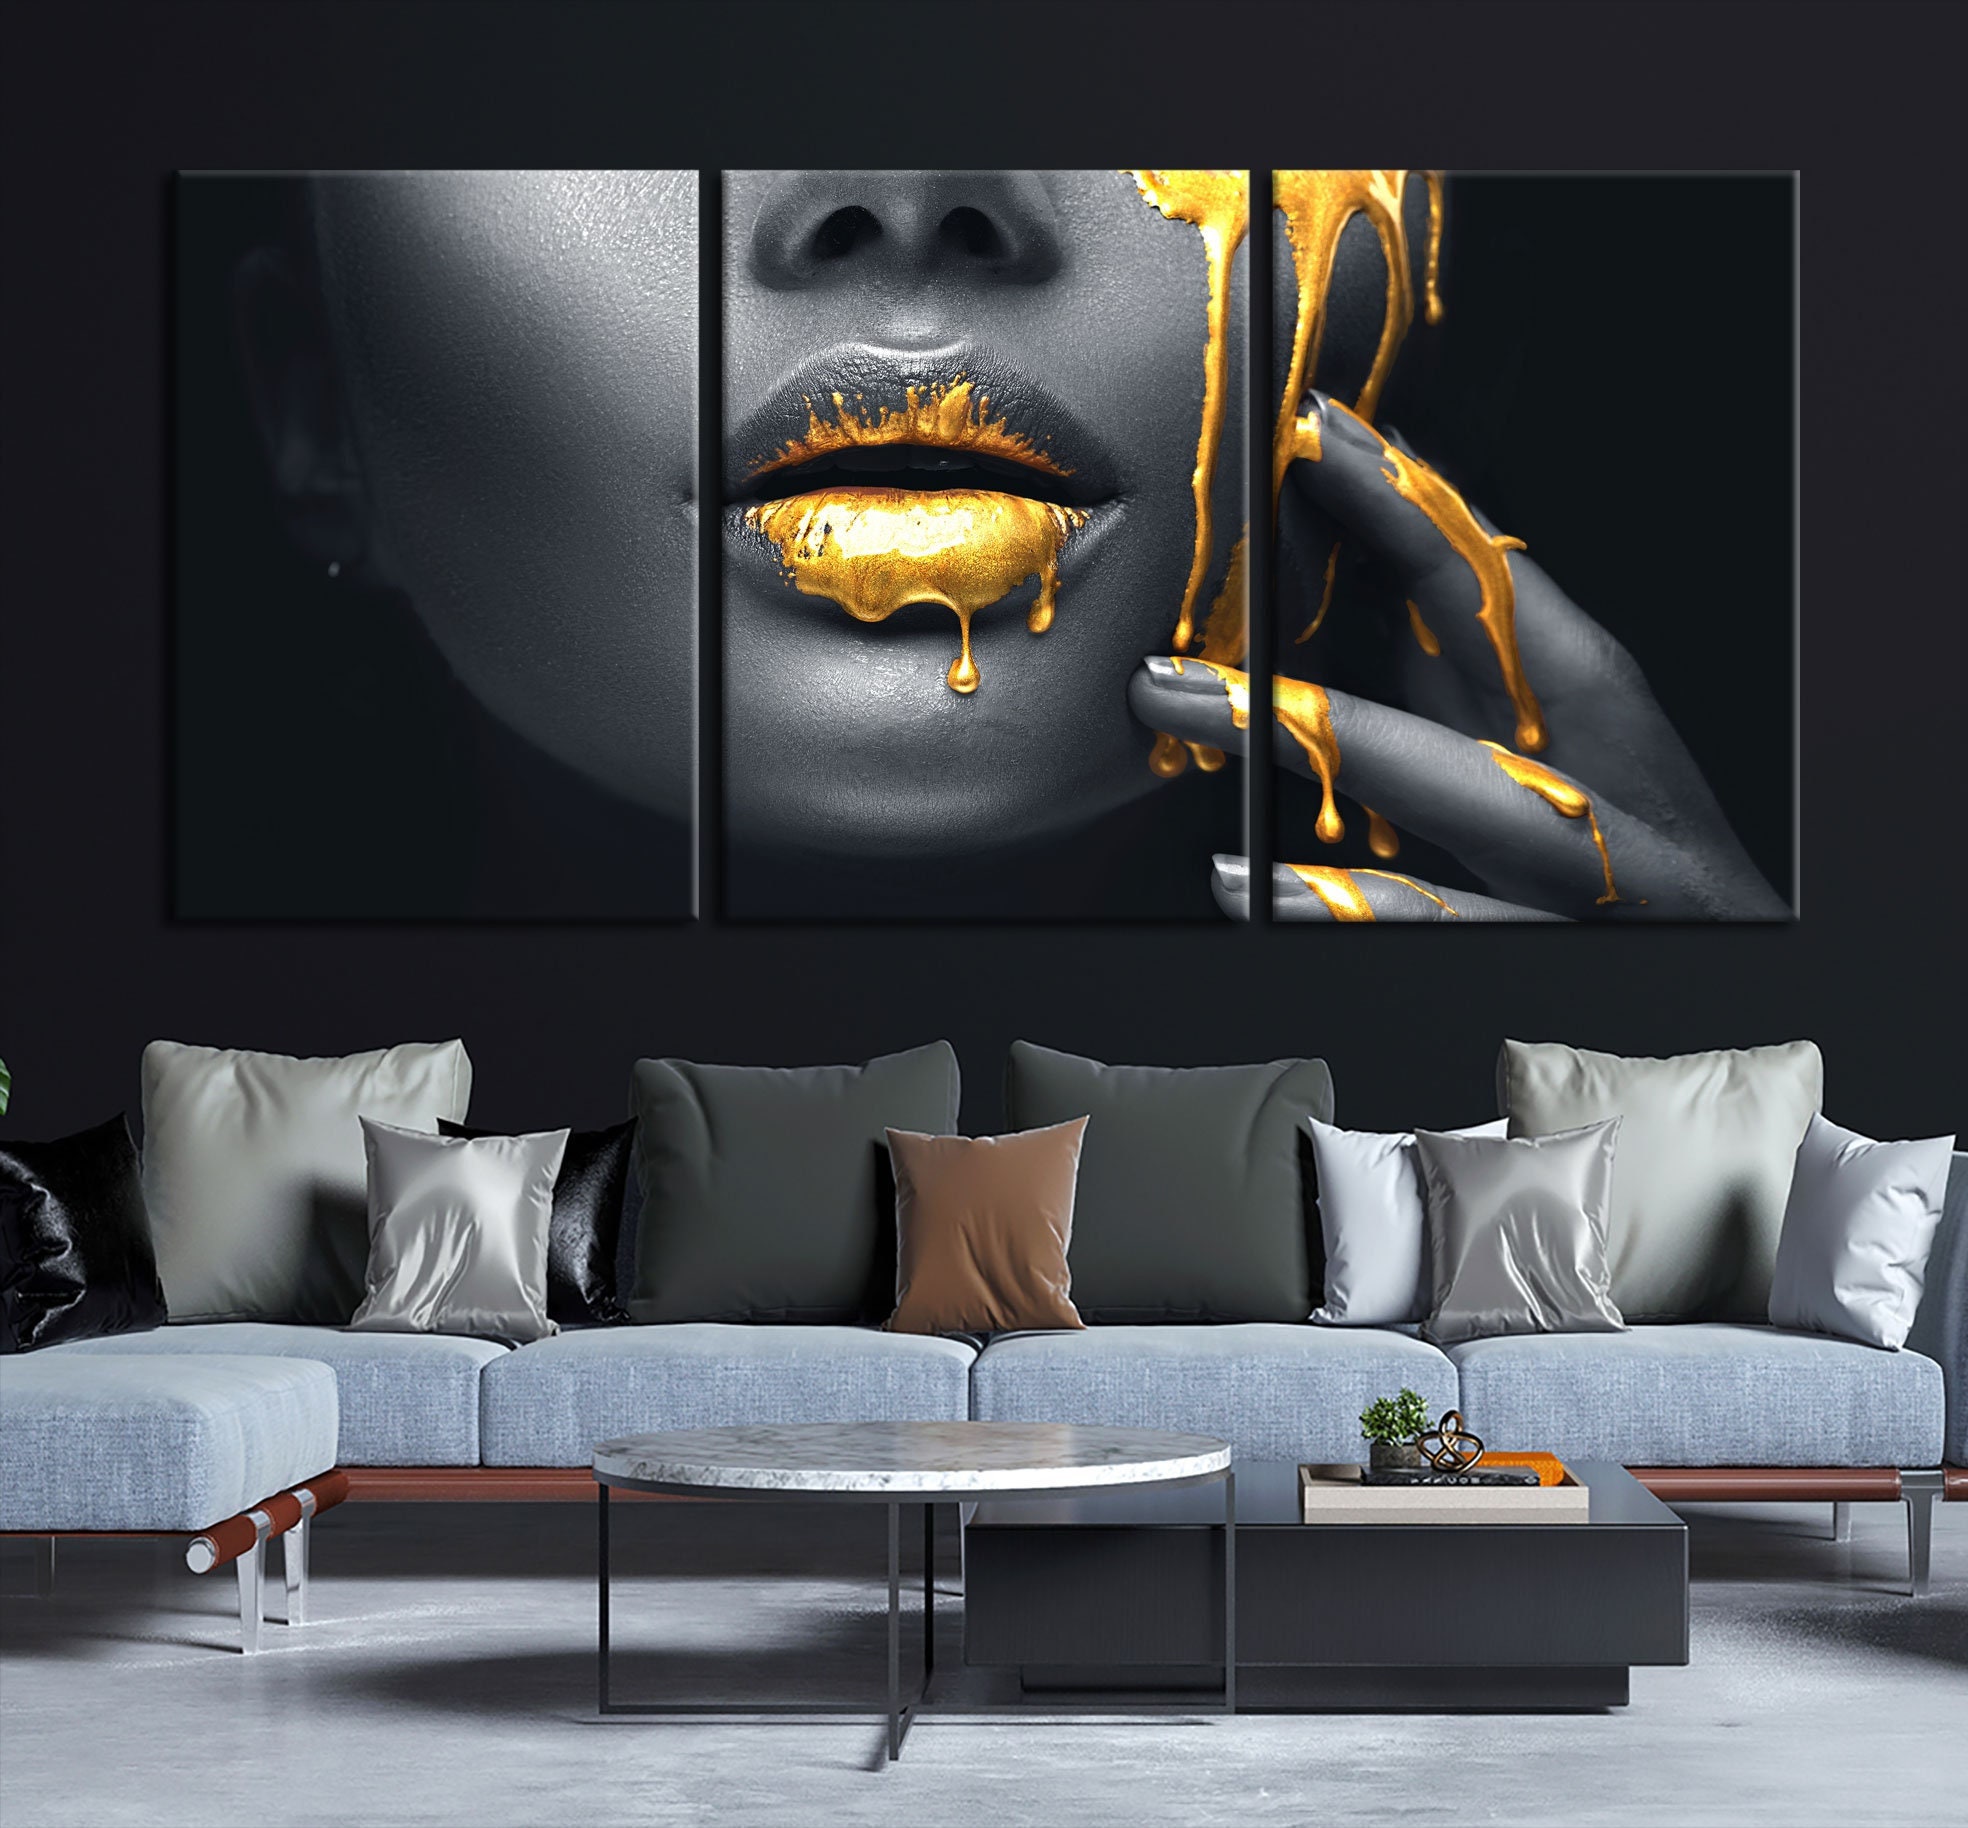 Shimmery Wall Art, Gold Black Luxury Wall Art Framed Canvas Prints Wal –  UnixCanvas